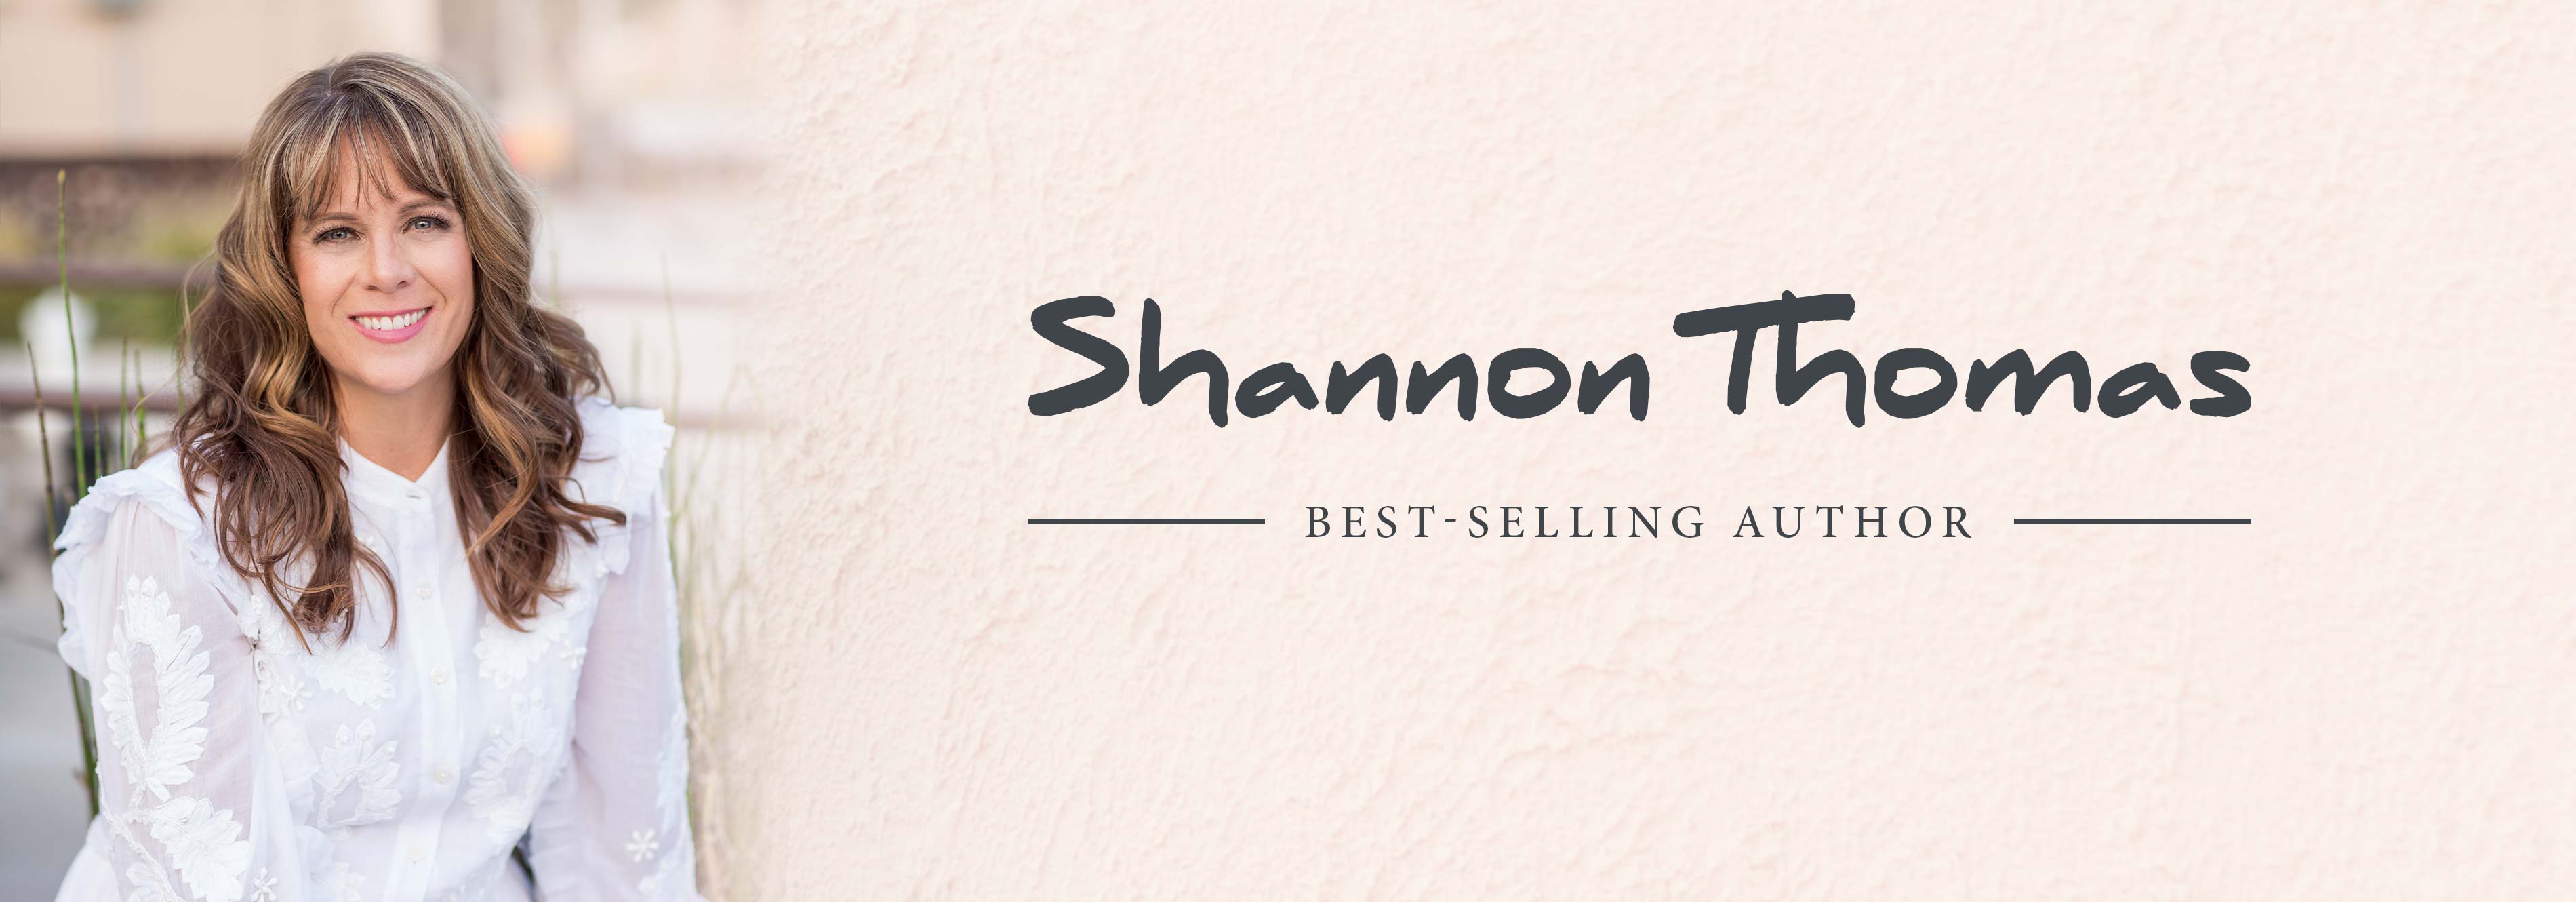 Shannon Thomas - Best-Selling Author